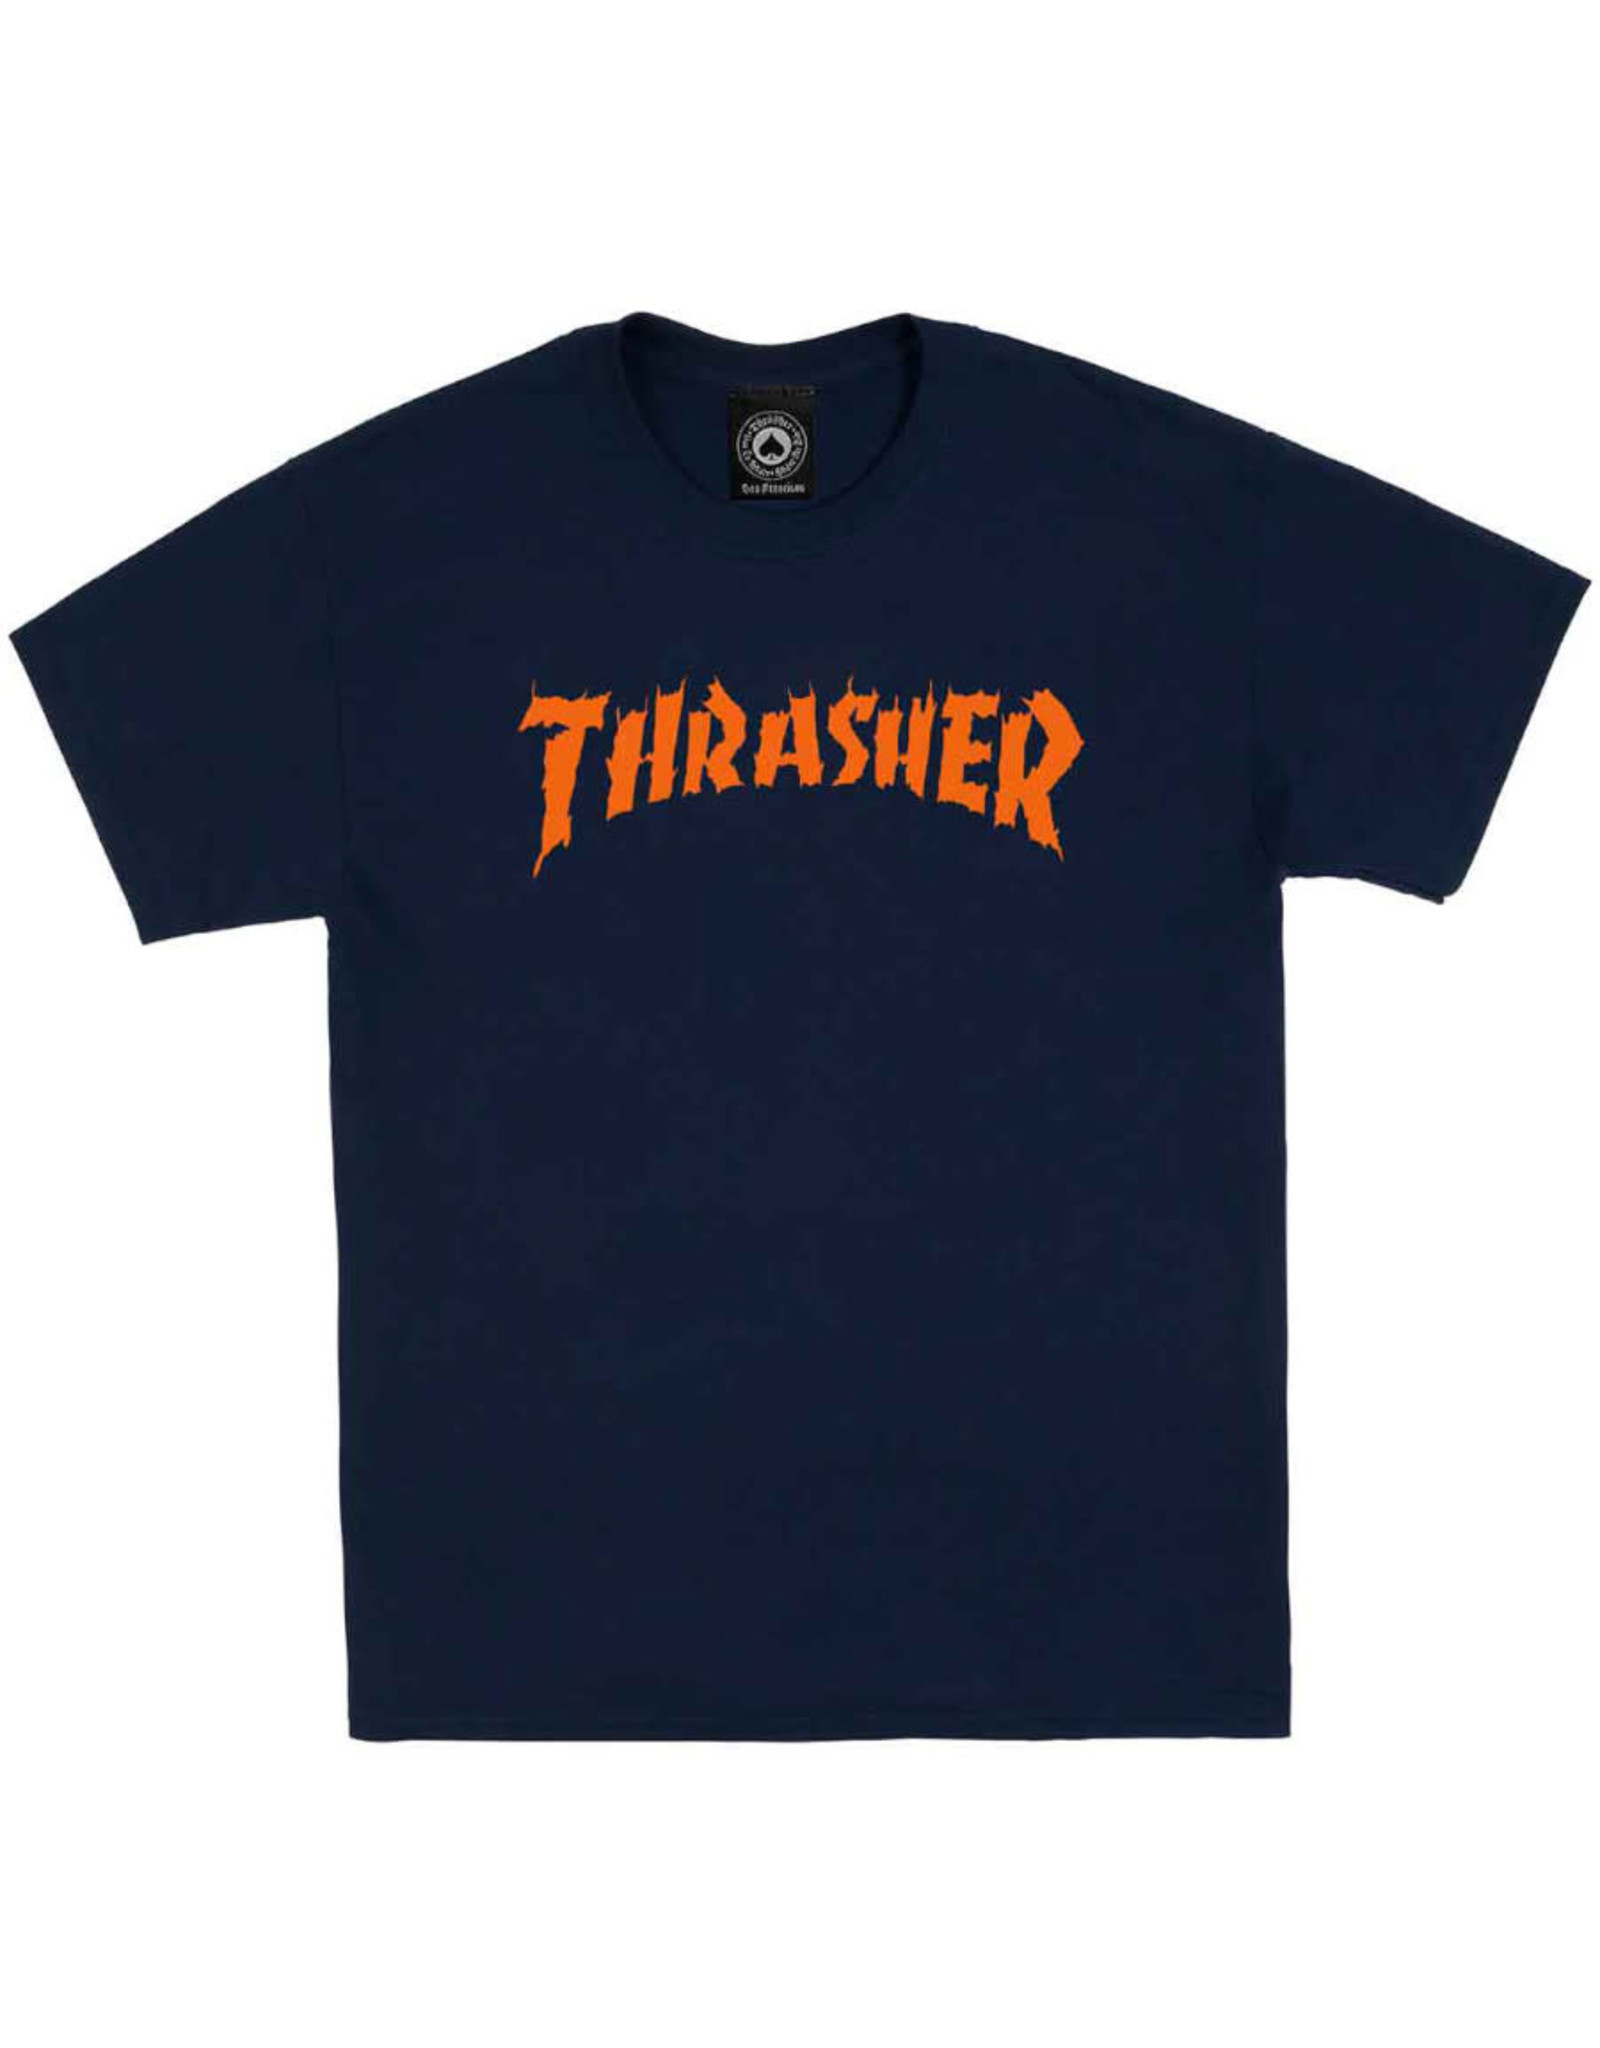 Thrasher Thrasher Tee Mens Burn It Down S/S (Navy Blue)